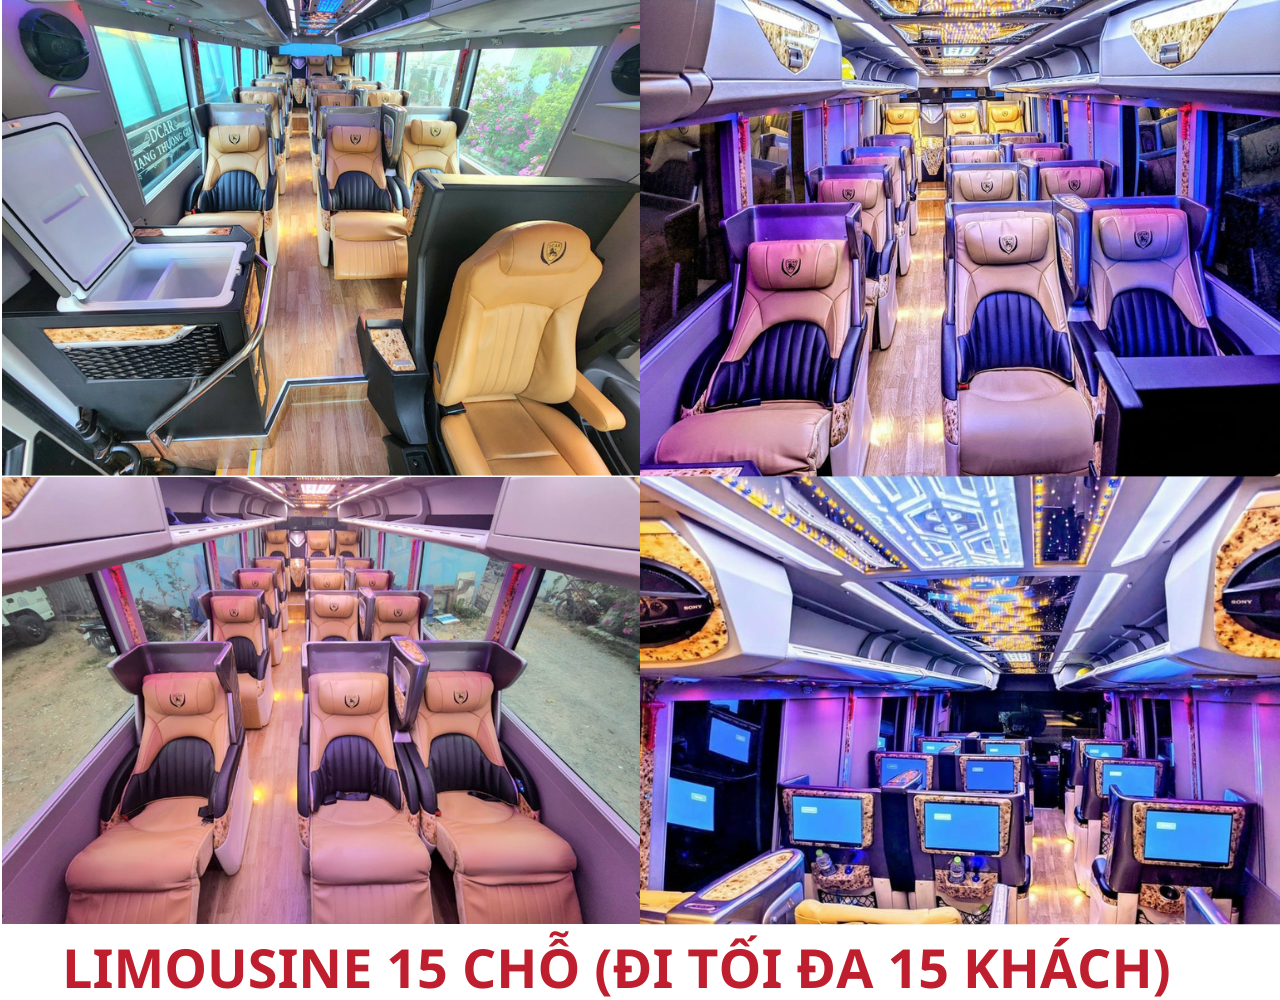 limousine-15-for-travel-toi-da-15-passenger.png (2.24 MB)